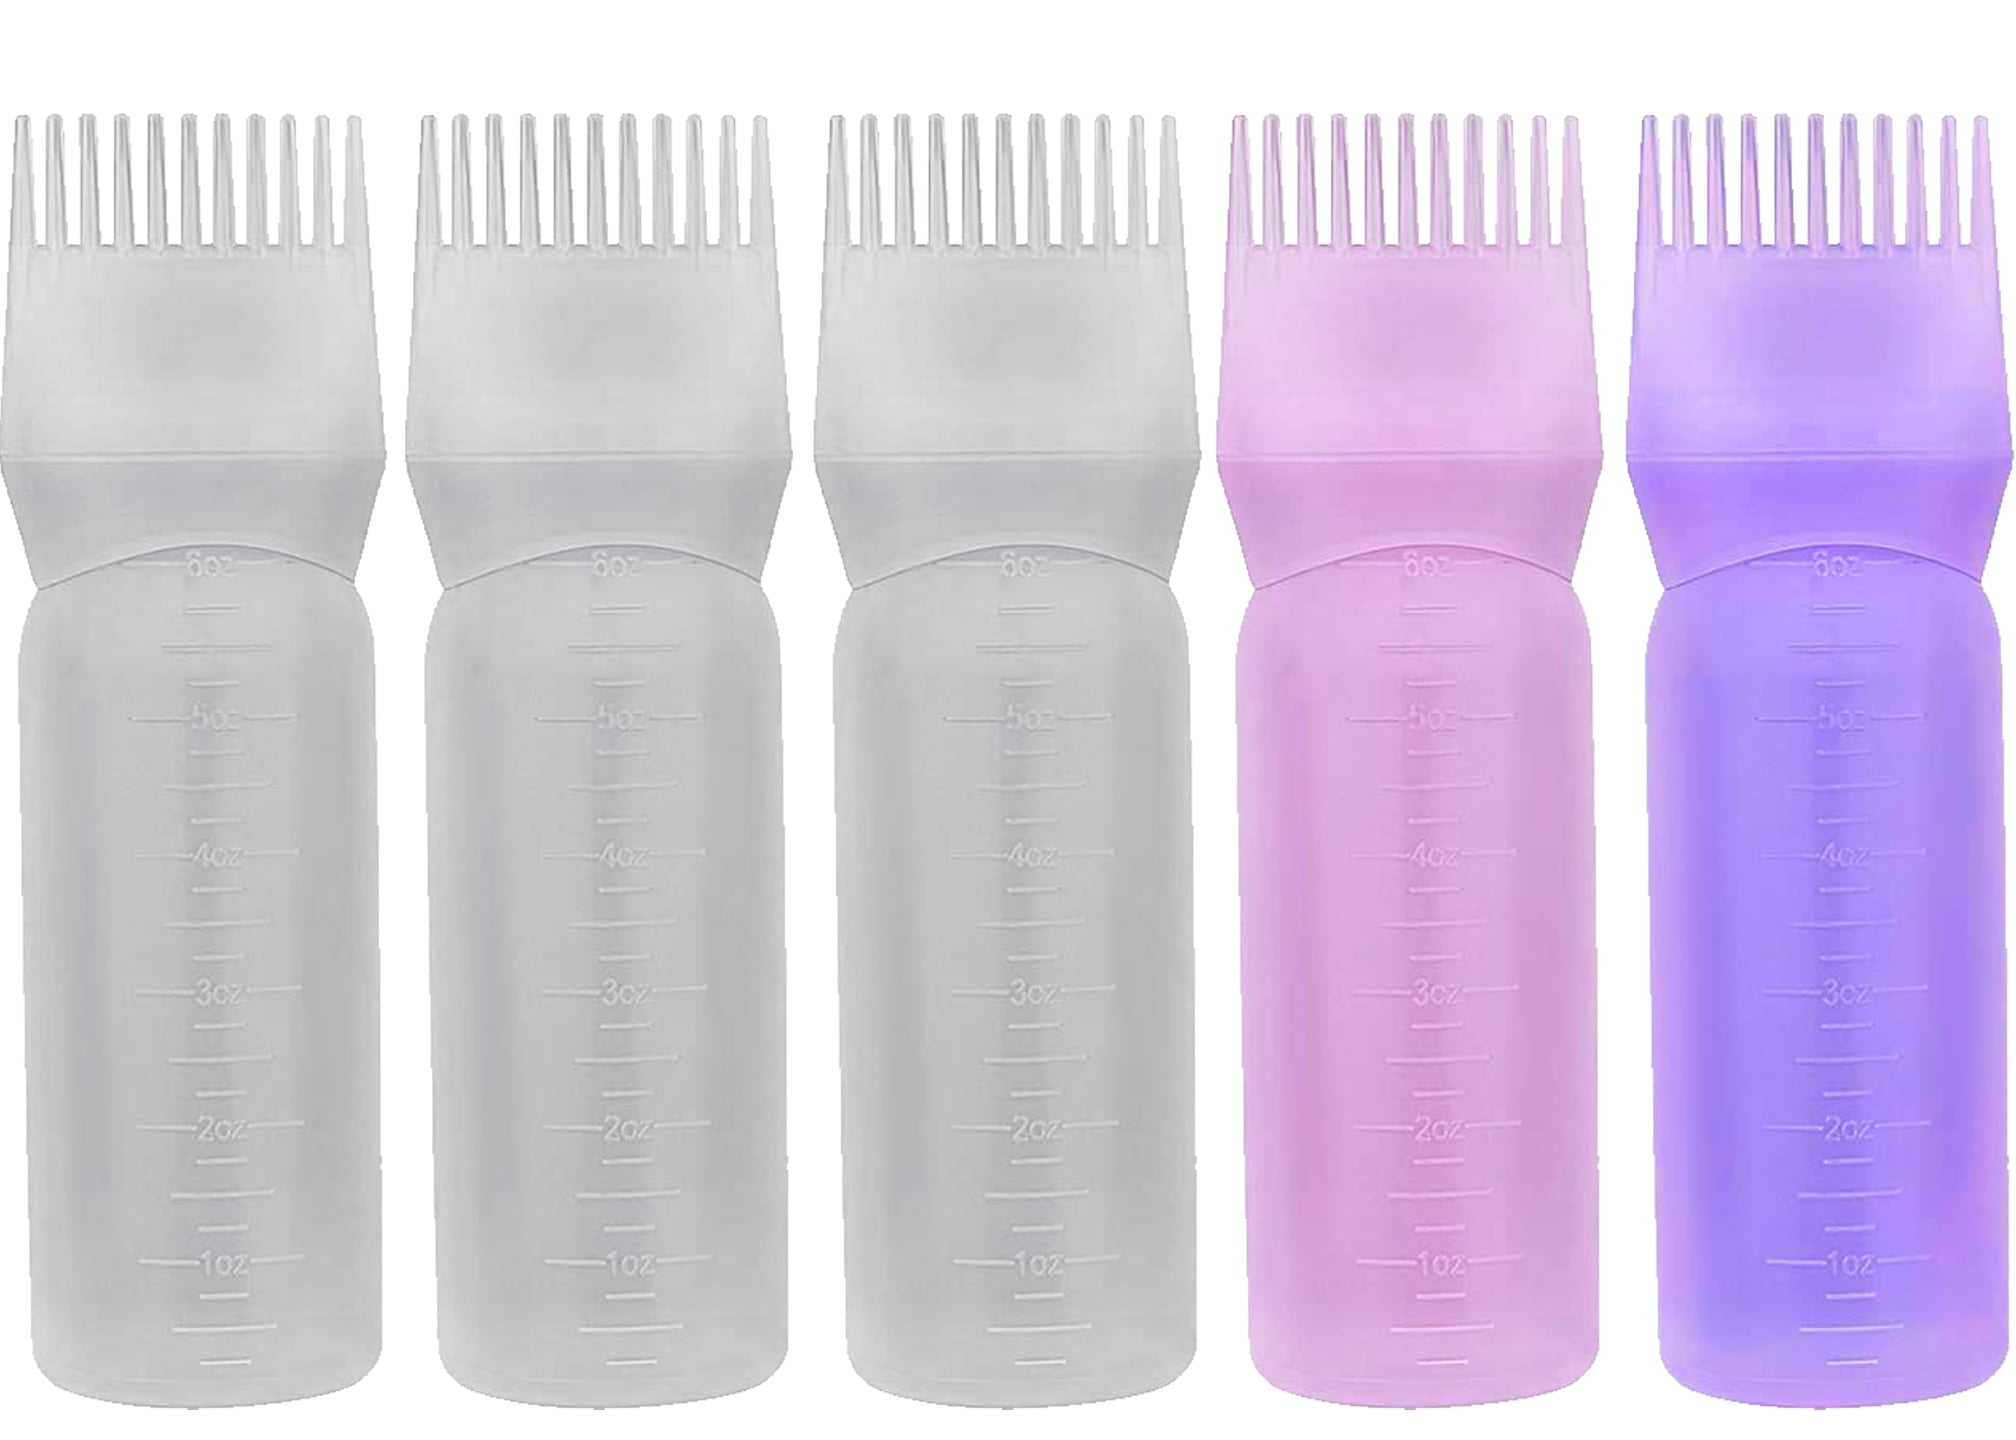  4pcs hair dye bottle comb bottle applicator dye